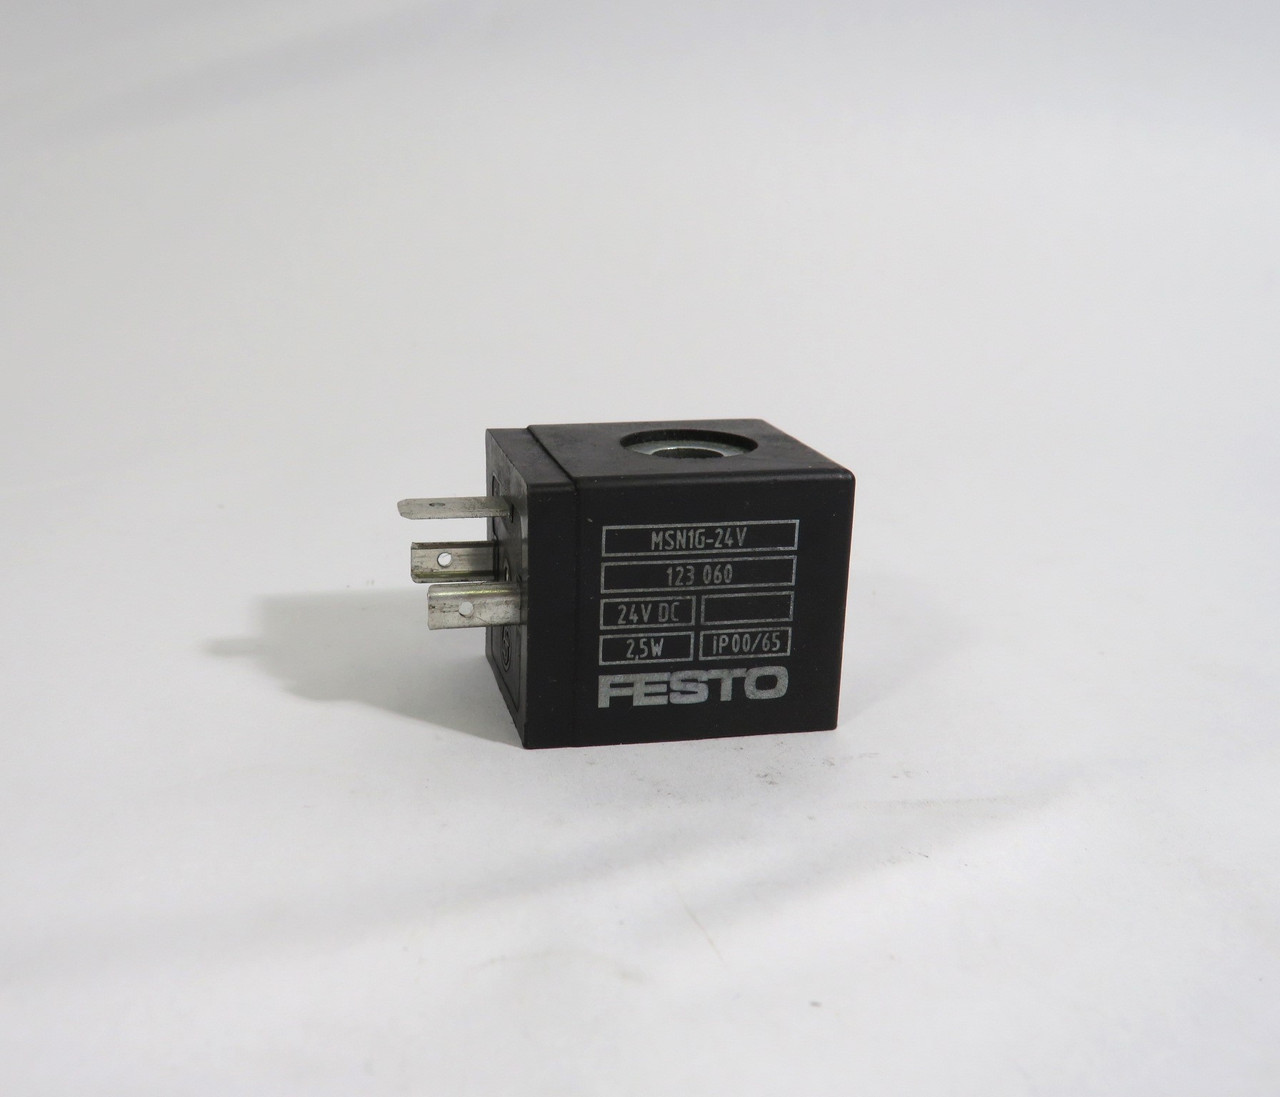 Festo 123060 MSN1G-24V Solenoid Coil 24VDC 2.5W USED